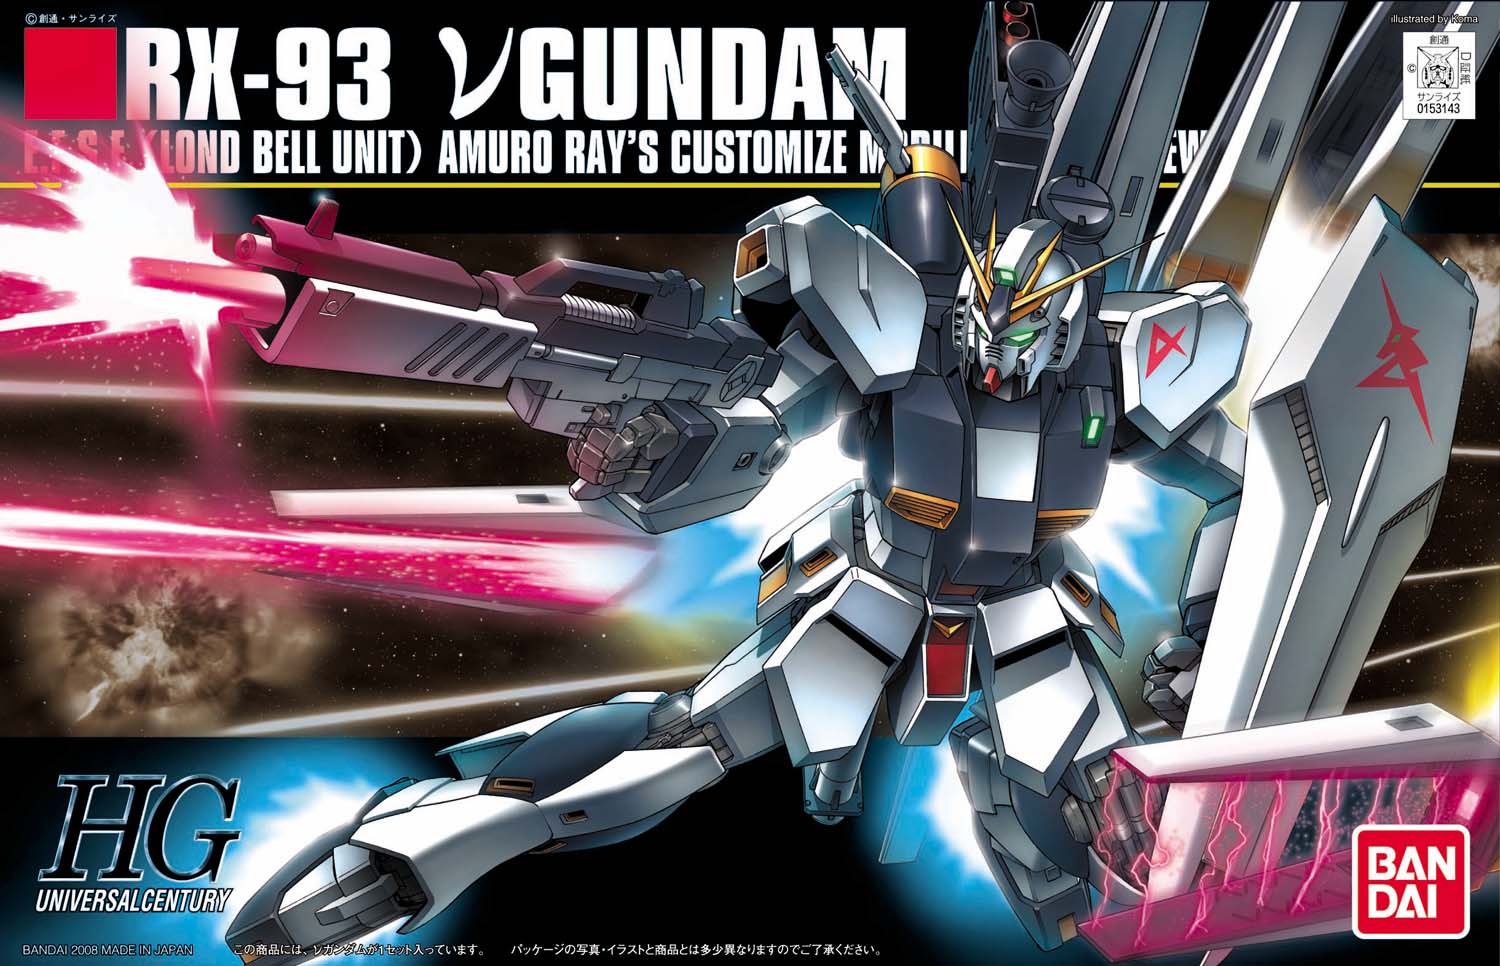 Gundam Marker Pour Type for Panel Lines Set, GUNPLA SA